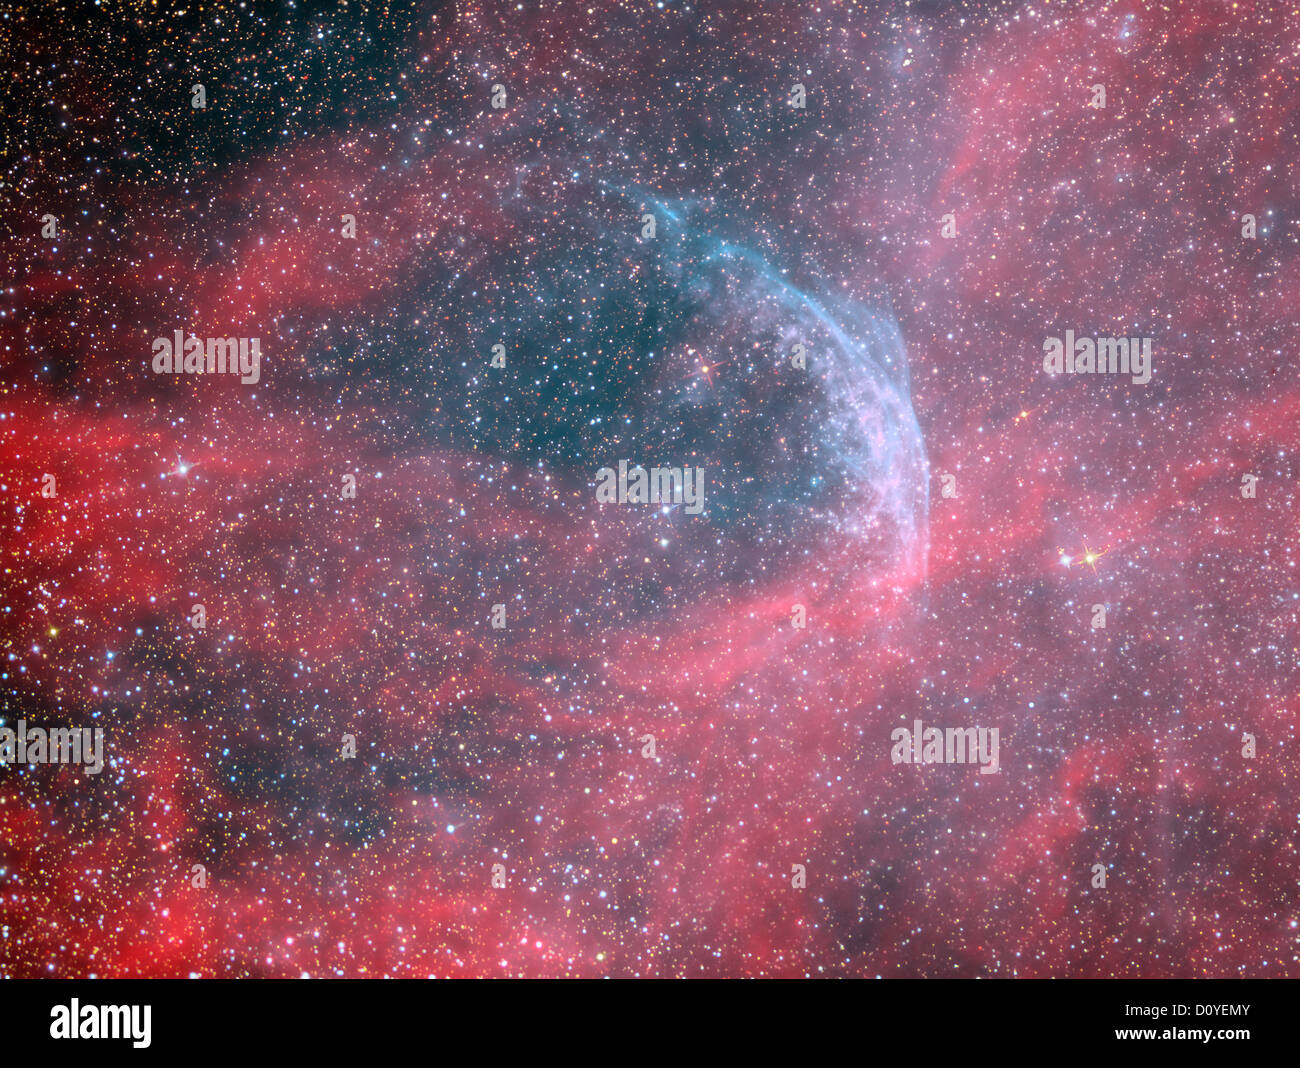 WR134 Wolf Rayet star and Ring Nebula Stock Photo